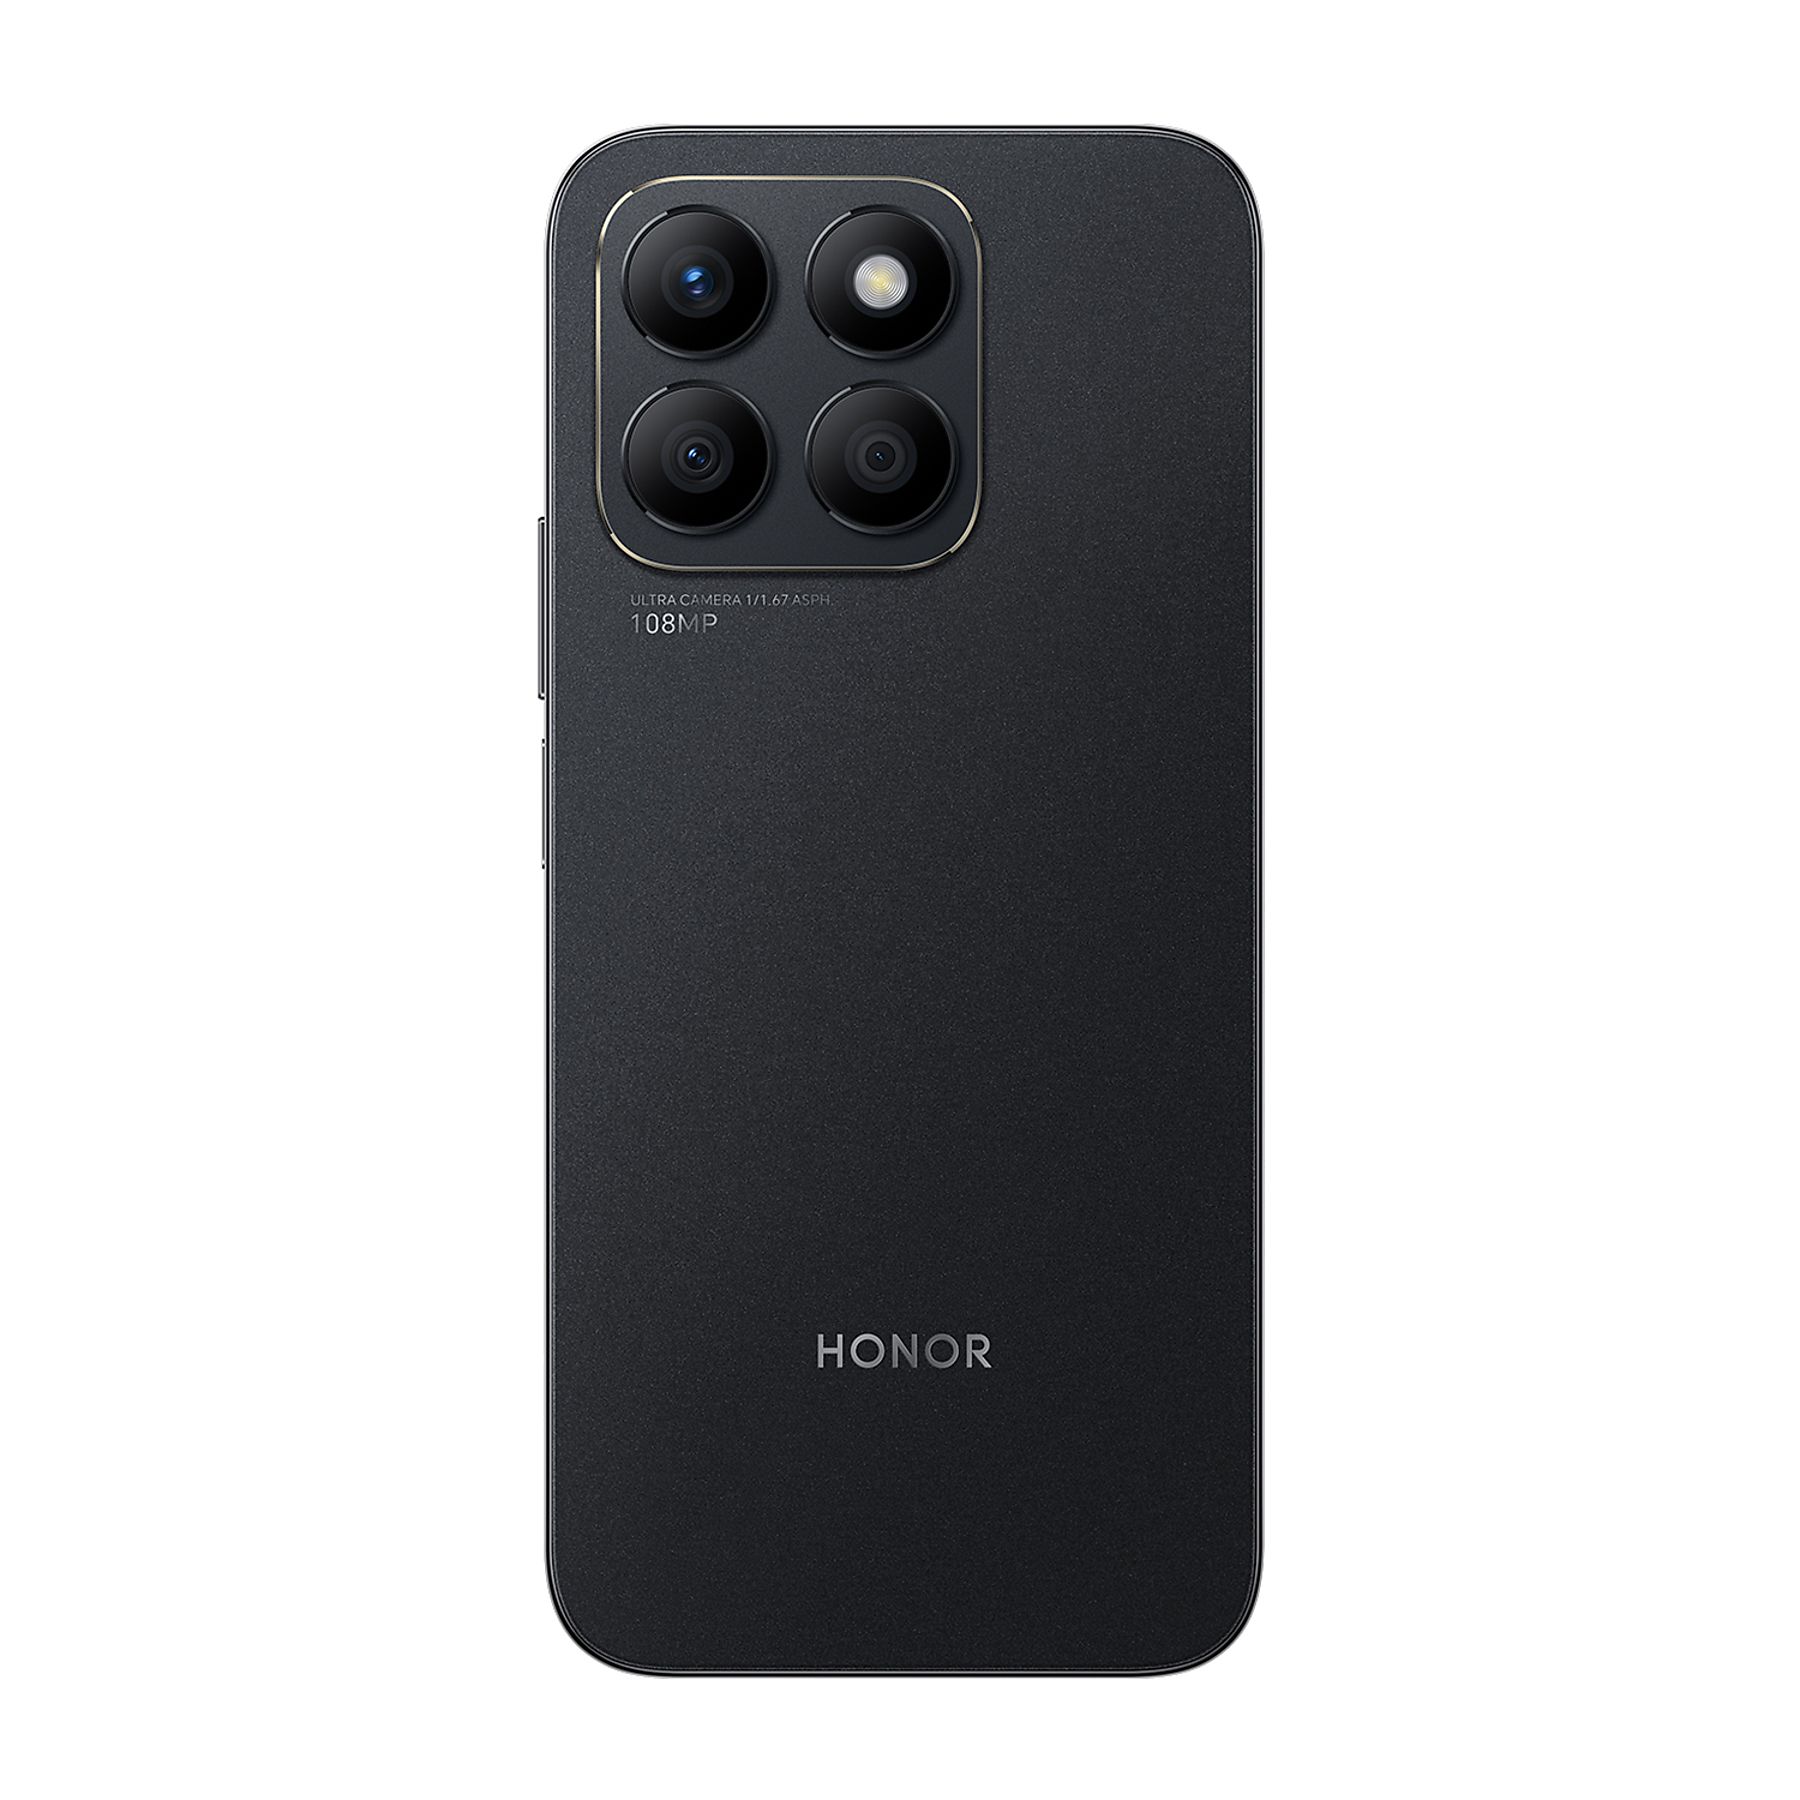 Smartphone Honor X8 BOOST + Earbuds X6 Midnight black